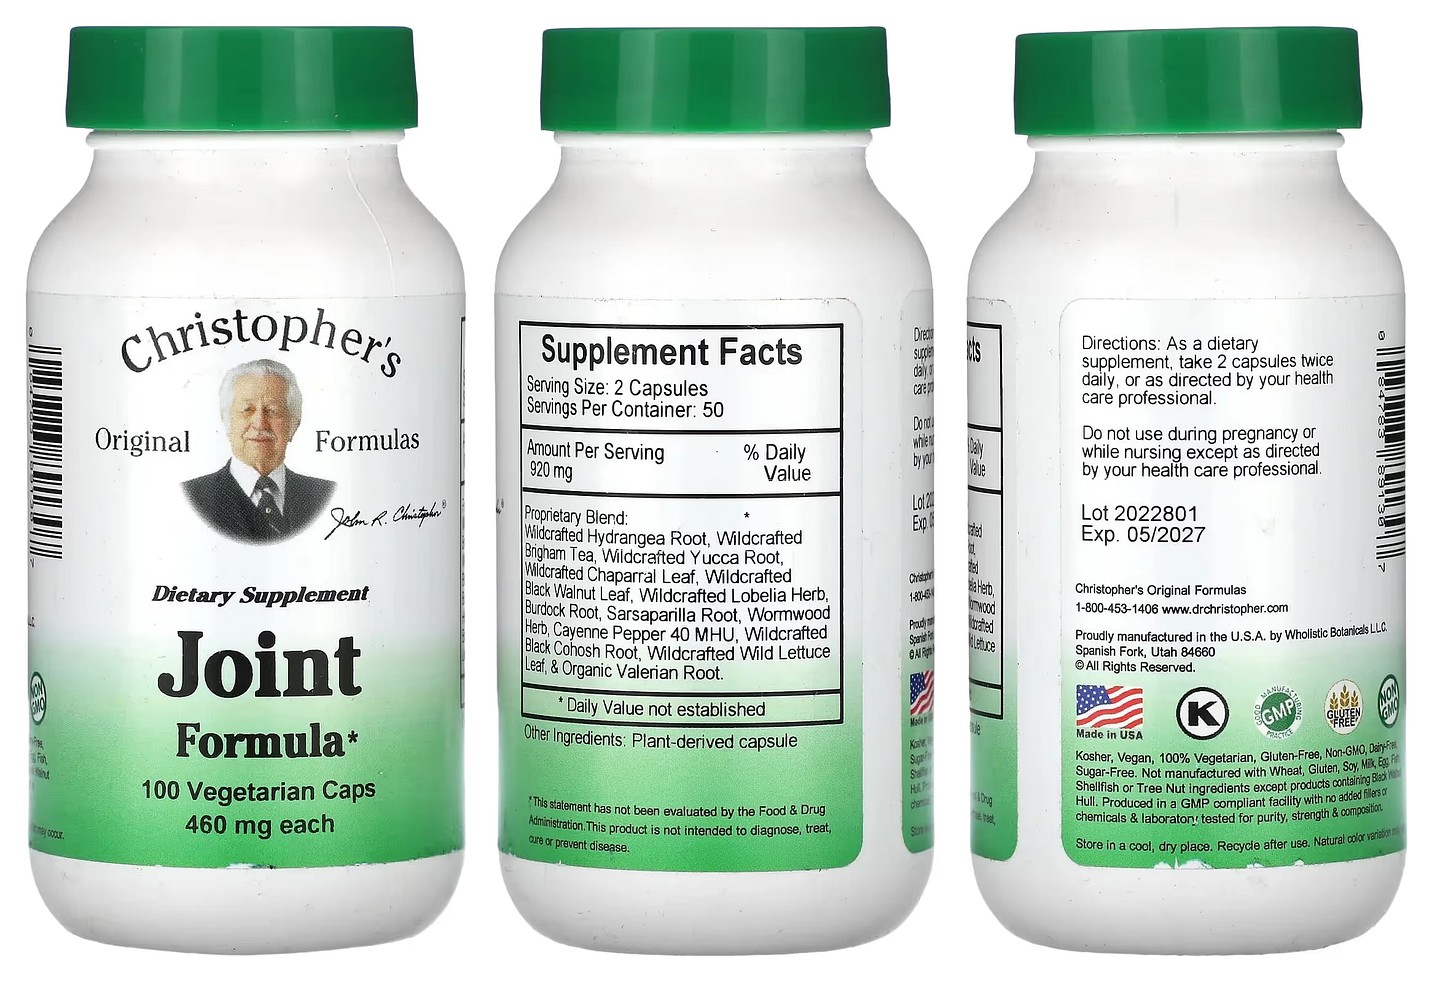 Christopher's Original Formulas, Joint Formula packaging